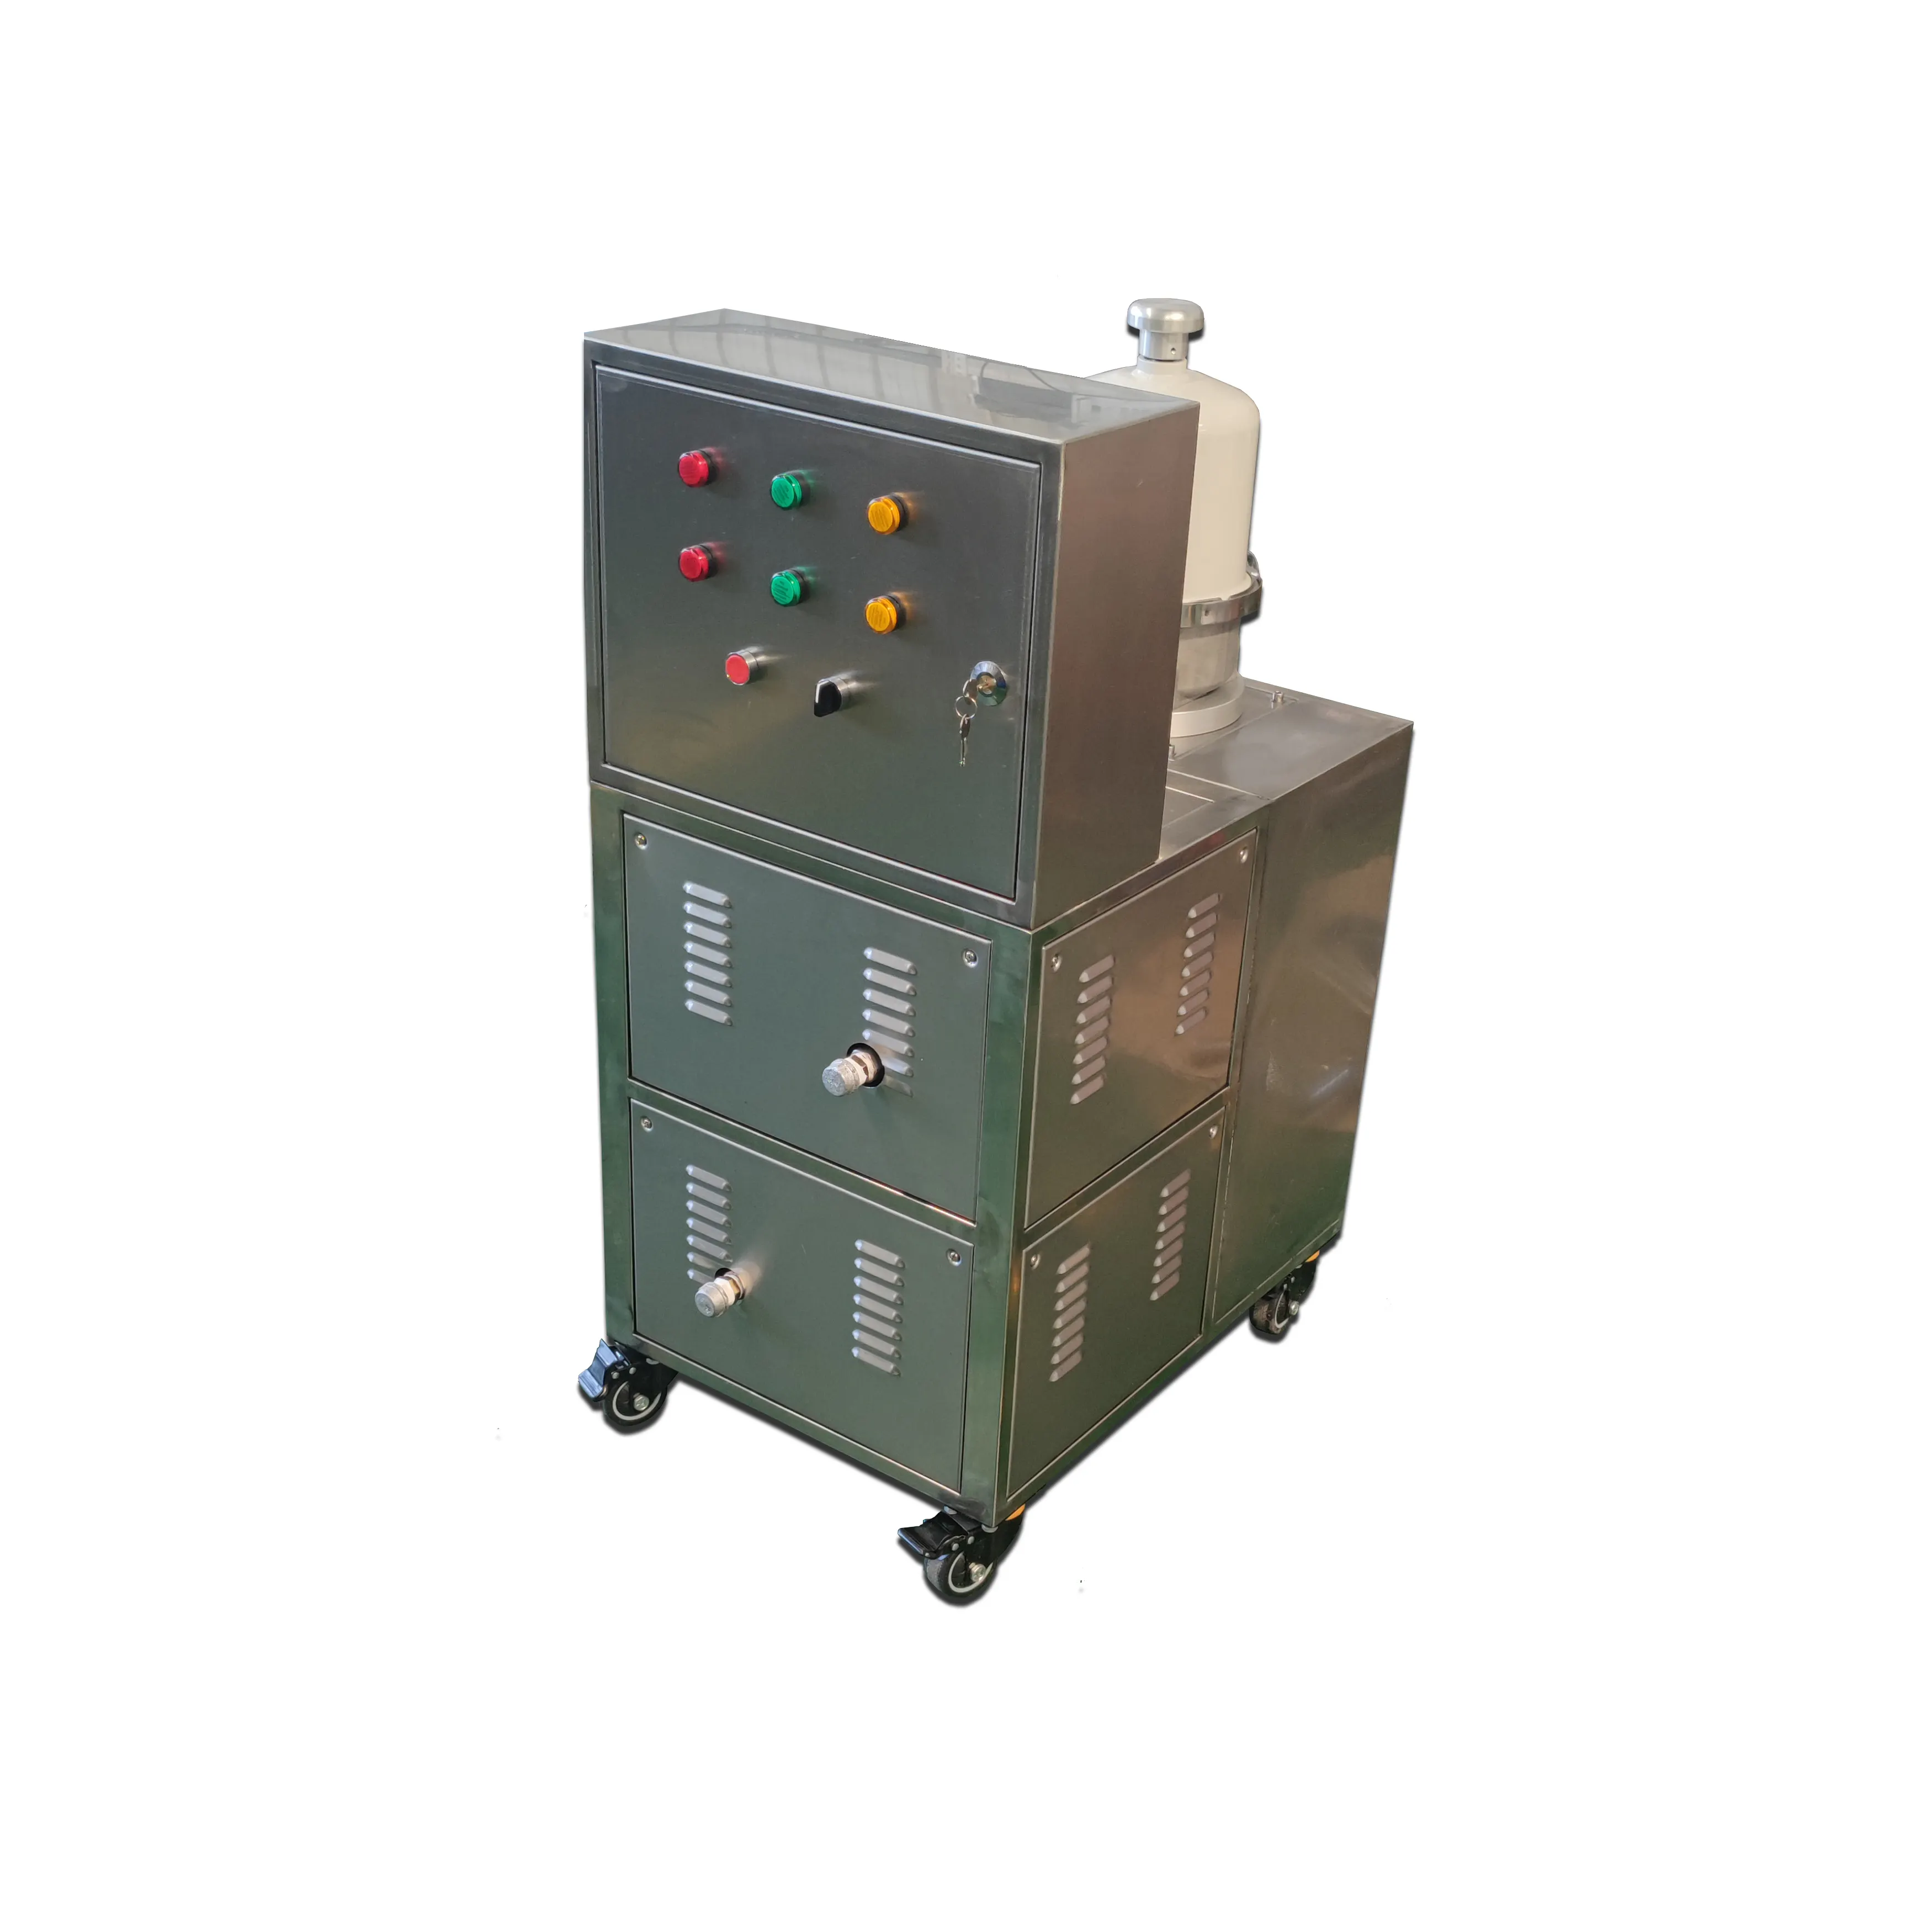 Oil purification machine for rust preventive oil